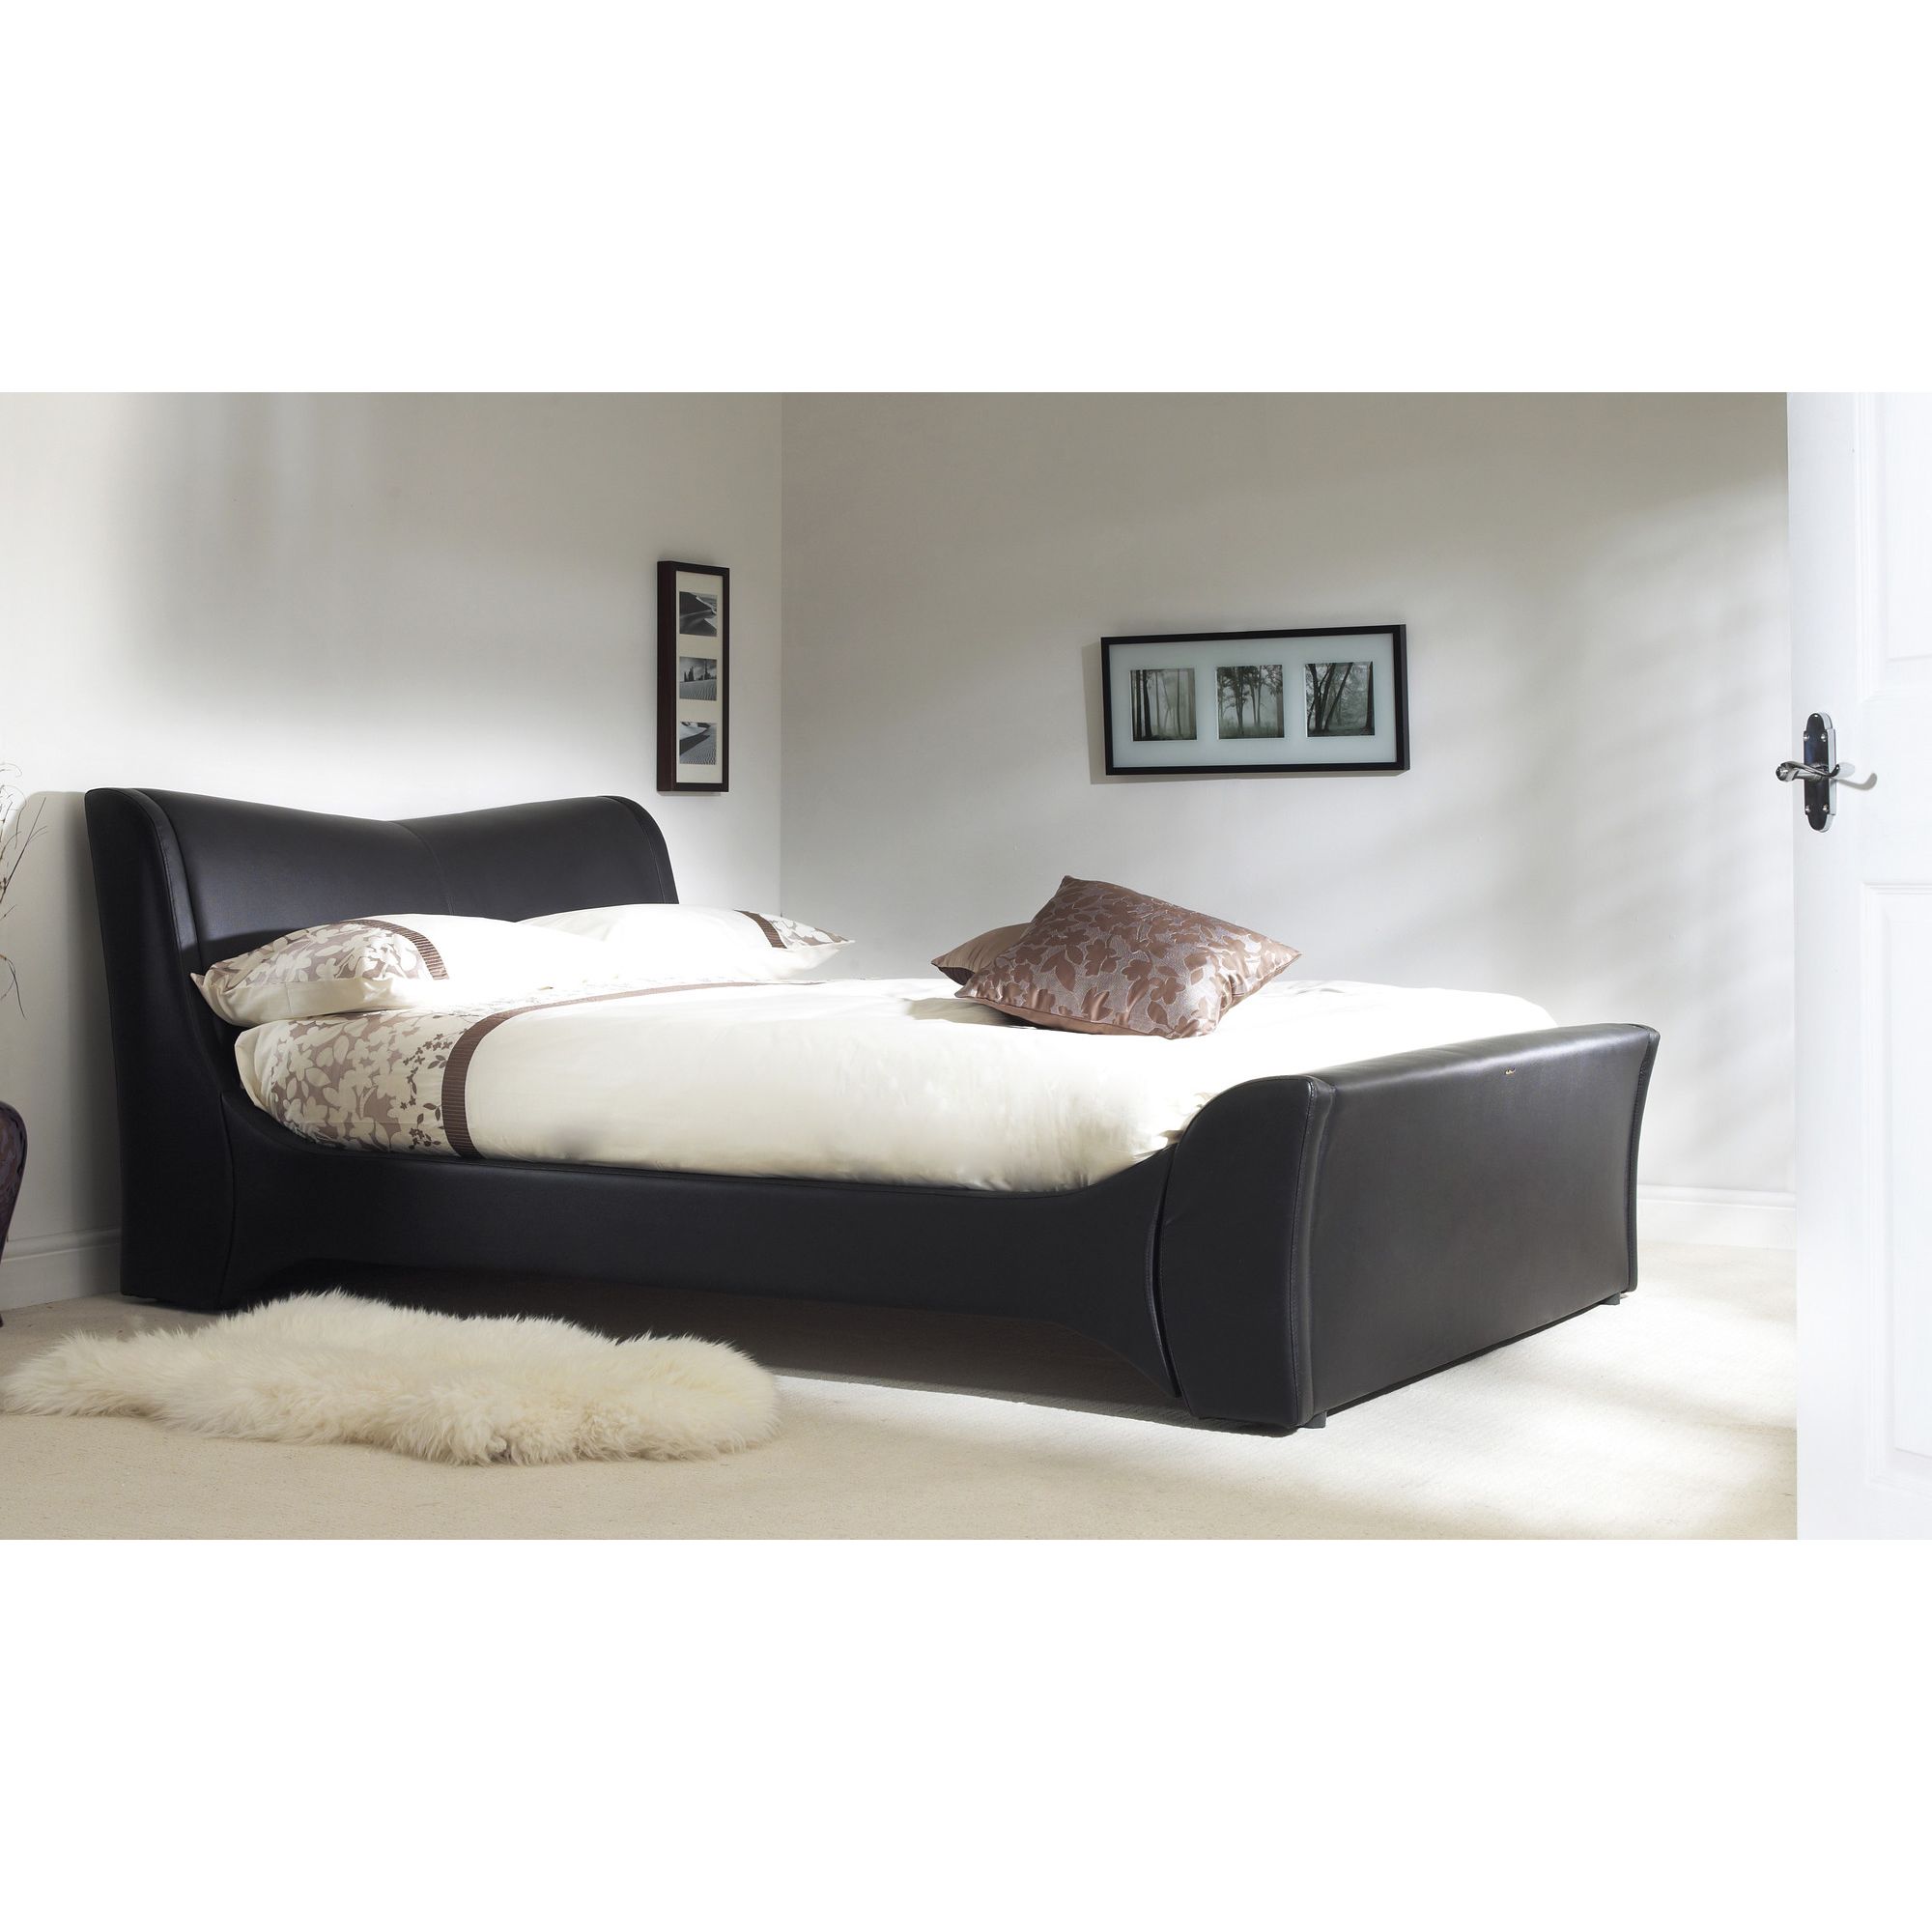 Frank Bosworth Veneto Leather Bed - Black - King at Tesco Direct